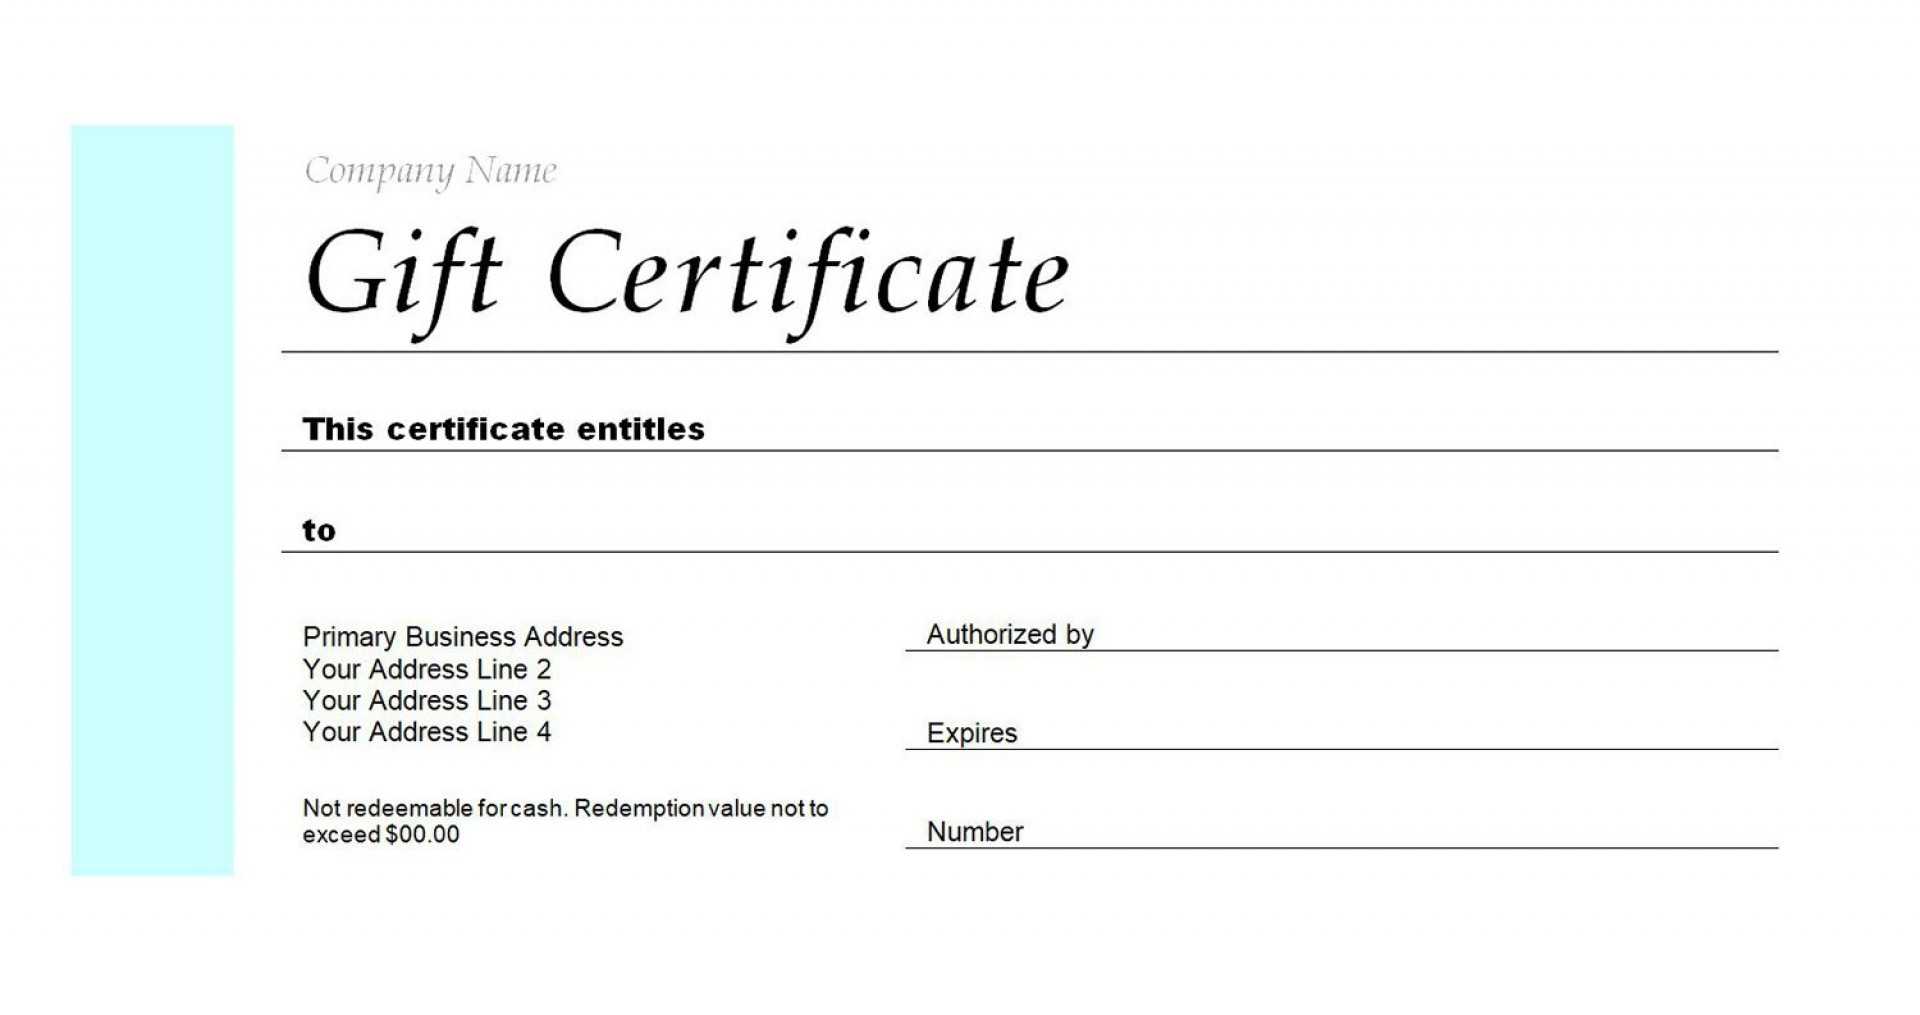 004 Gift Blank Certificate Template Astounding Ideas Inside Company Gift Certificate Template